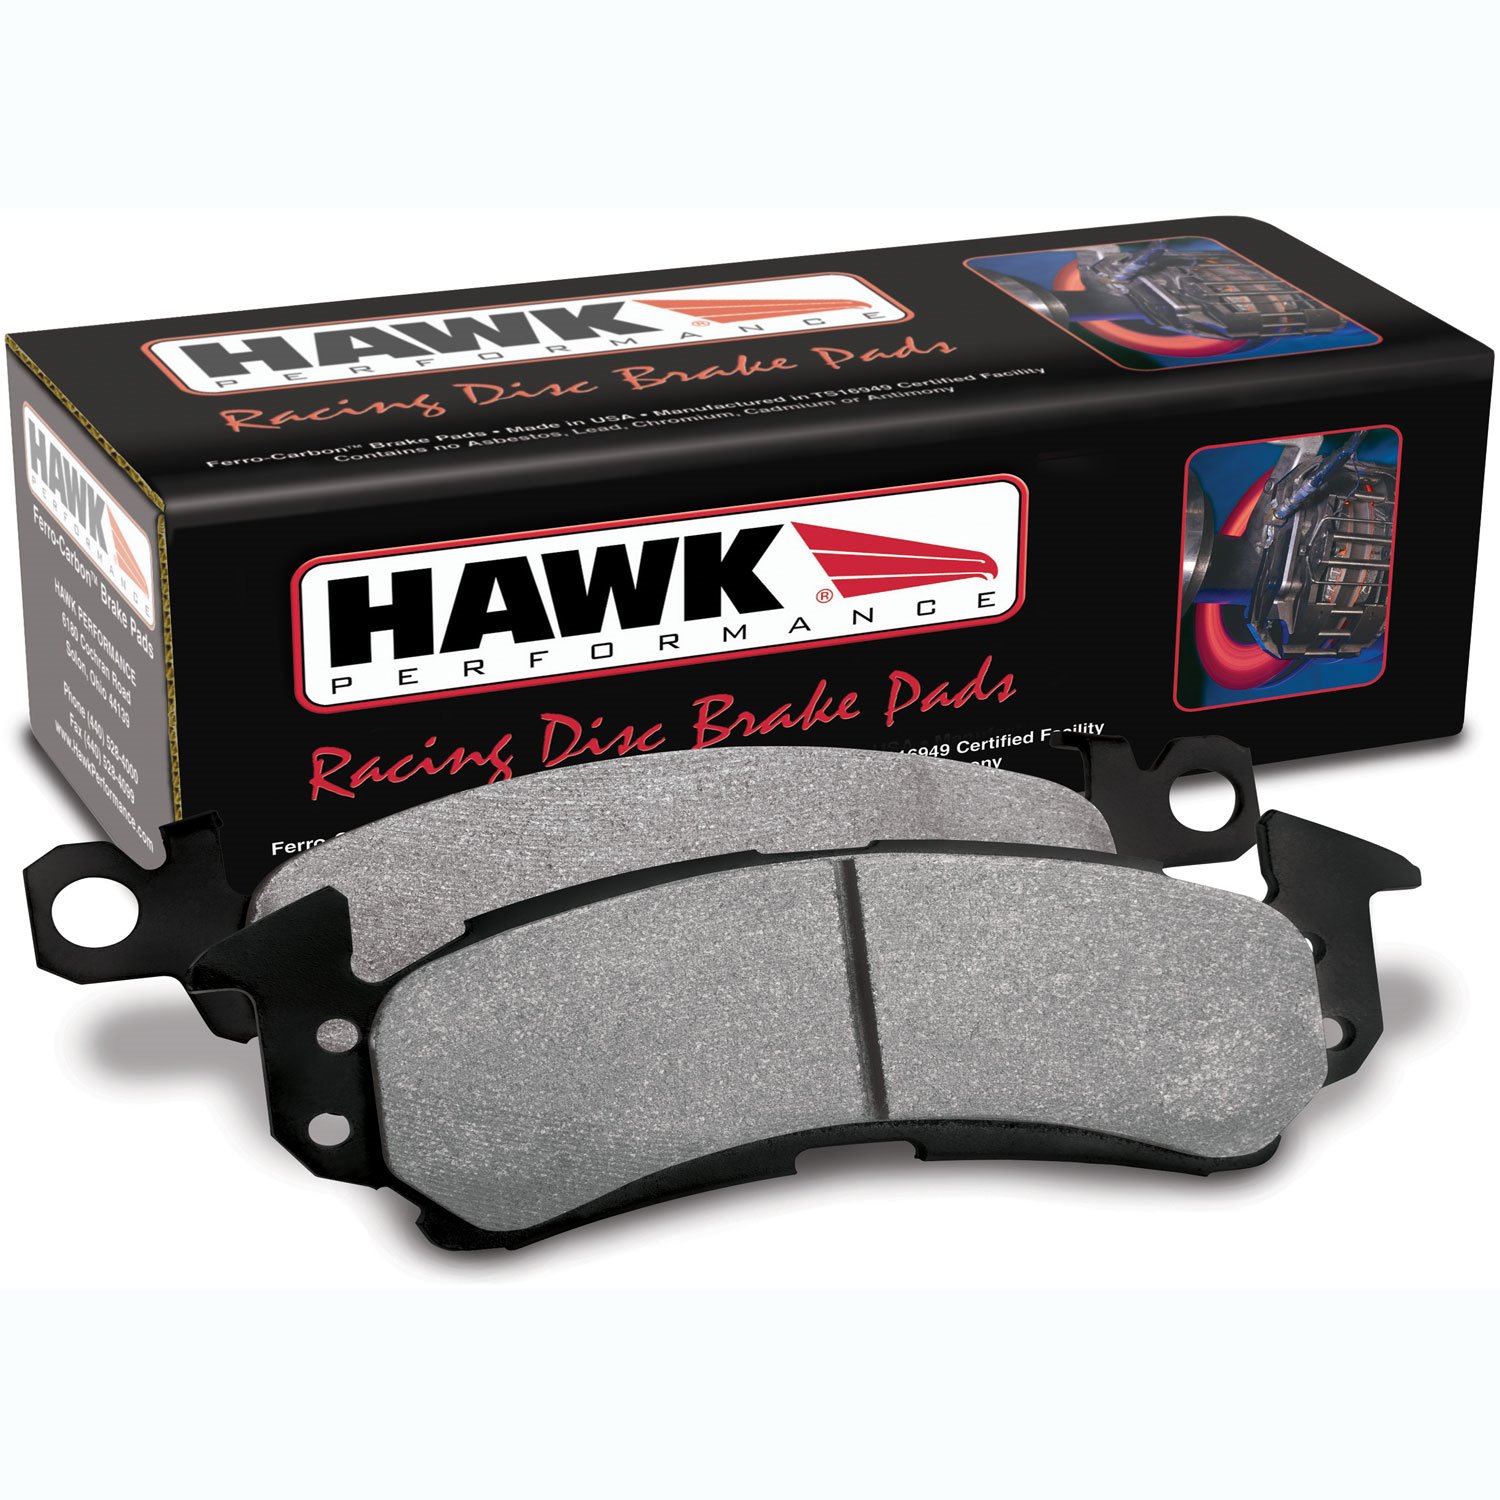 Disc Brake Pad HT-10 w/0.510 Thickness